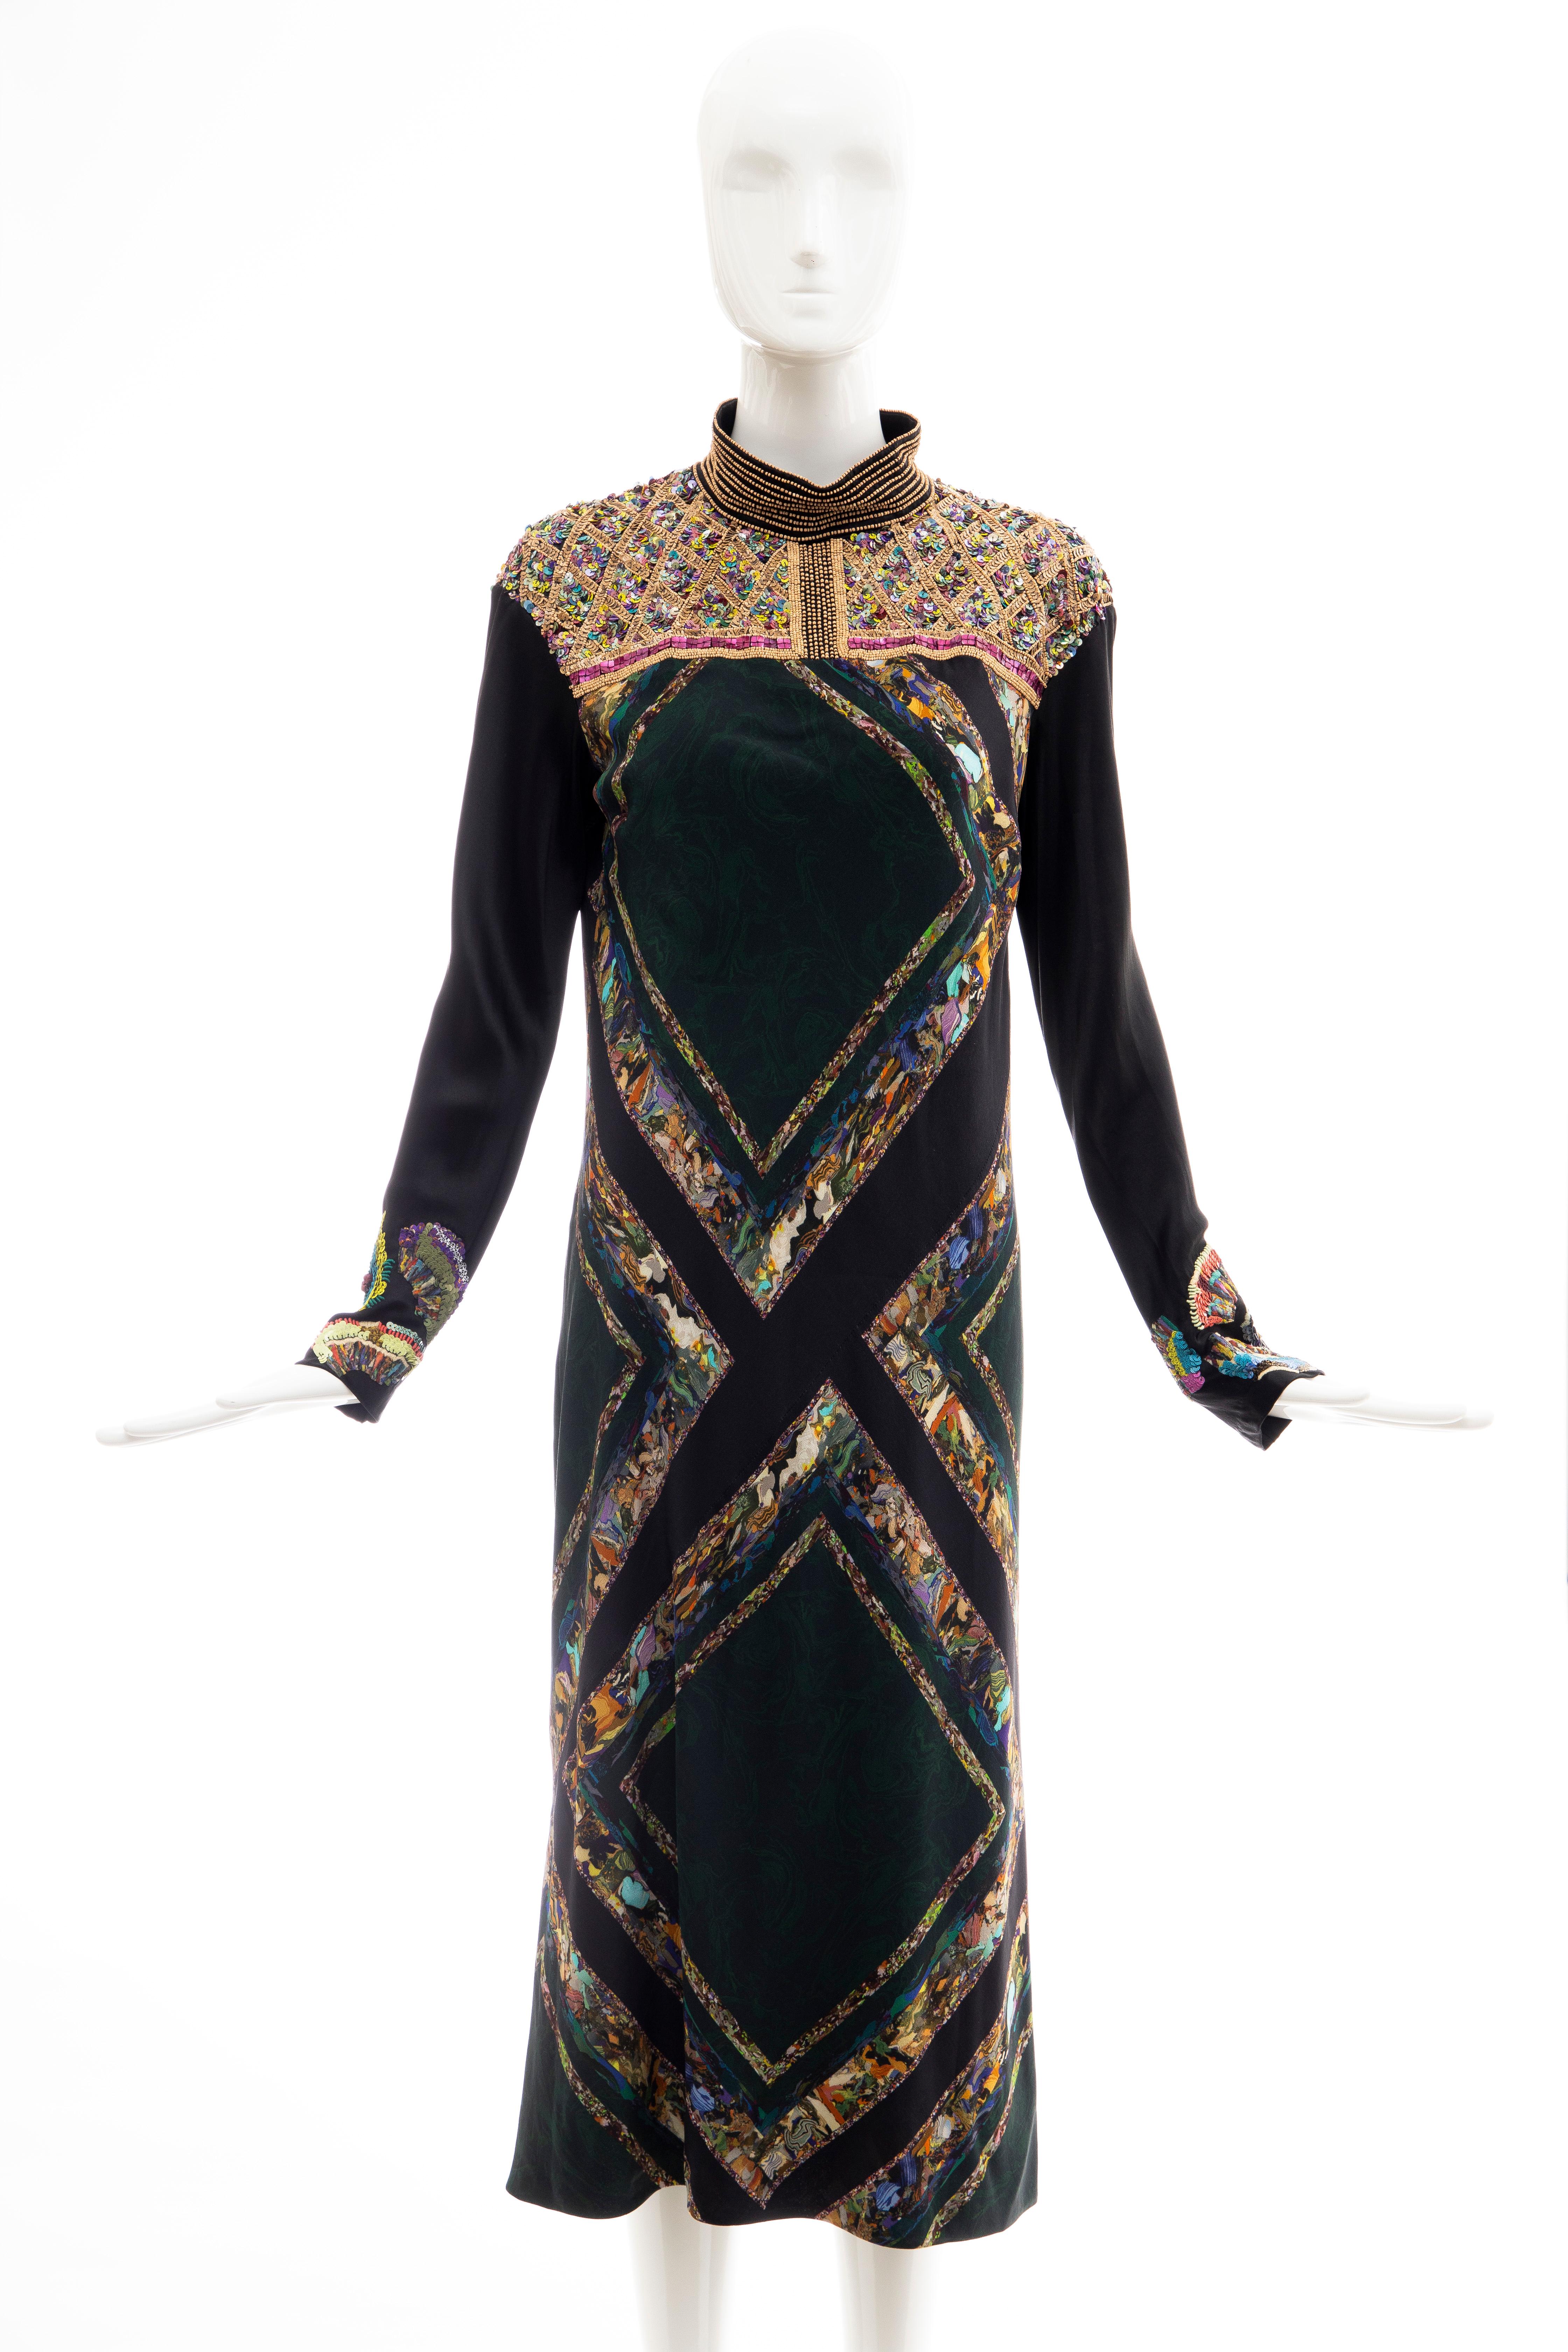 Dries van Noten Runway Fall 2008, bead & sequin embroidery, black long sleeve printed silk dress with  back button closure at nape.

EU. 42

Bust:  35, Waist: 36, Hip: 38, Shoulder: 18, Sleeve: 23.5, Length: 45.5 